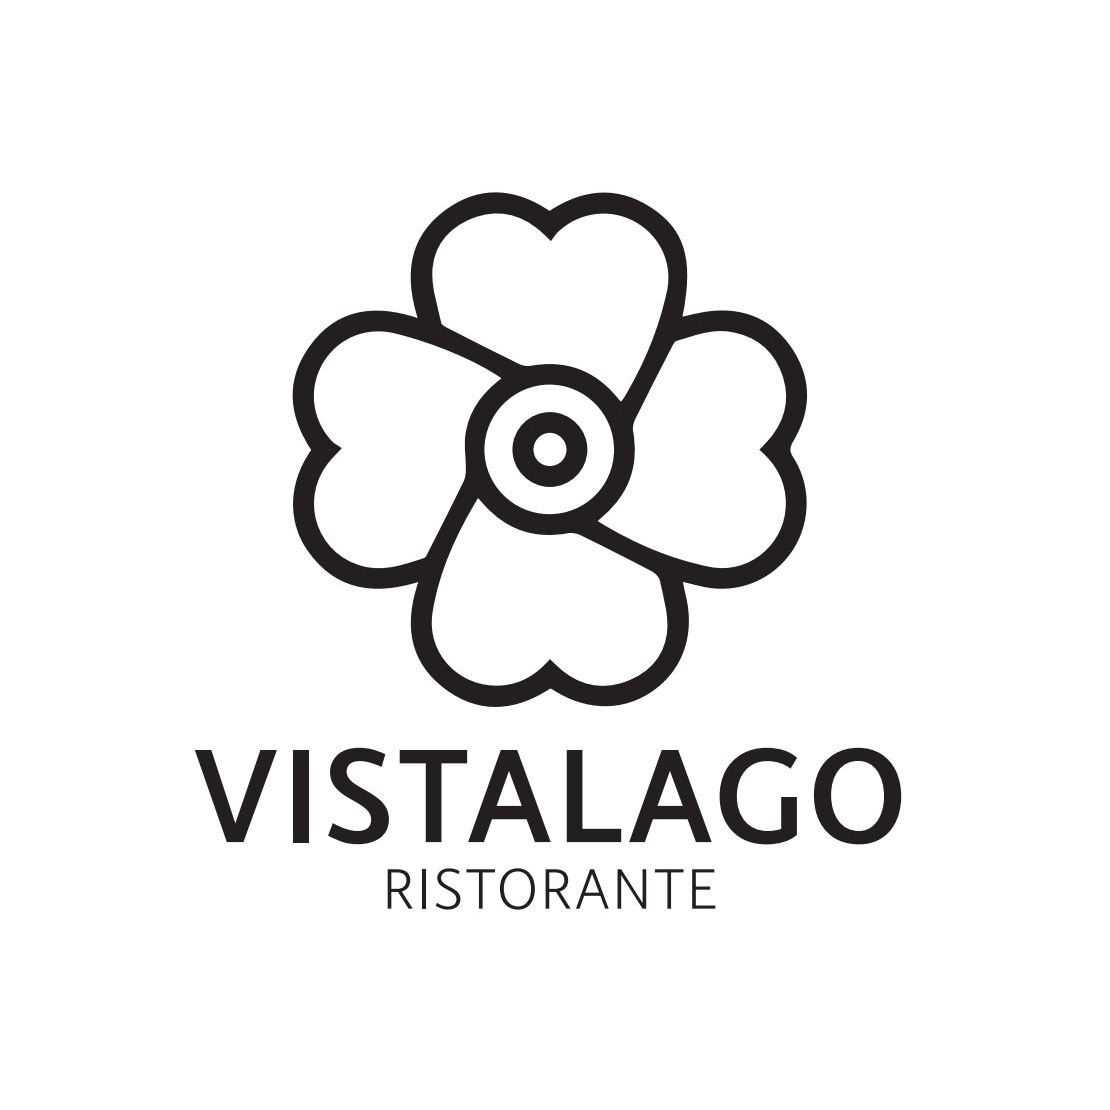 Ristorante Vistalago - Restaurant - Lugano - 091 921 10 48 Switzerland | ShowMeLocal.com